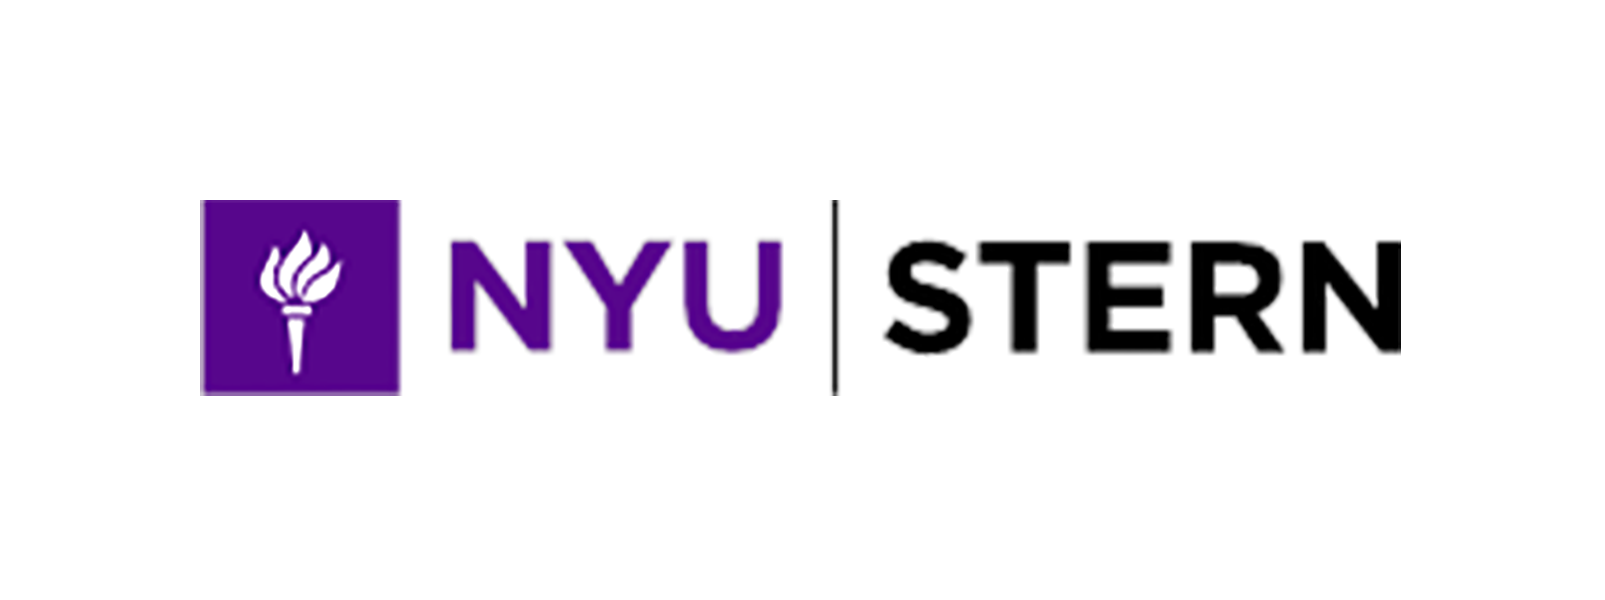 NYU business school adds FinTech specialization to MBA program